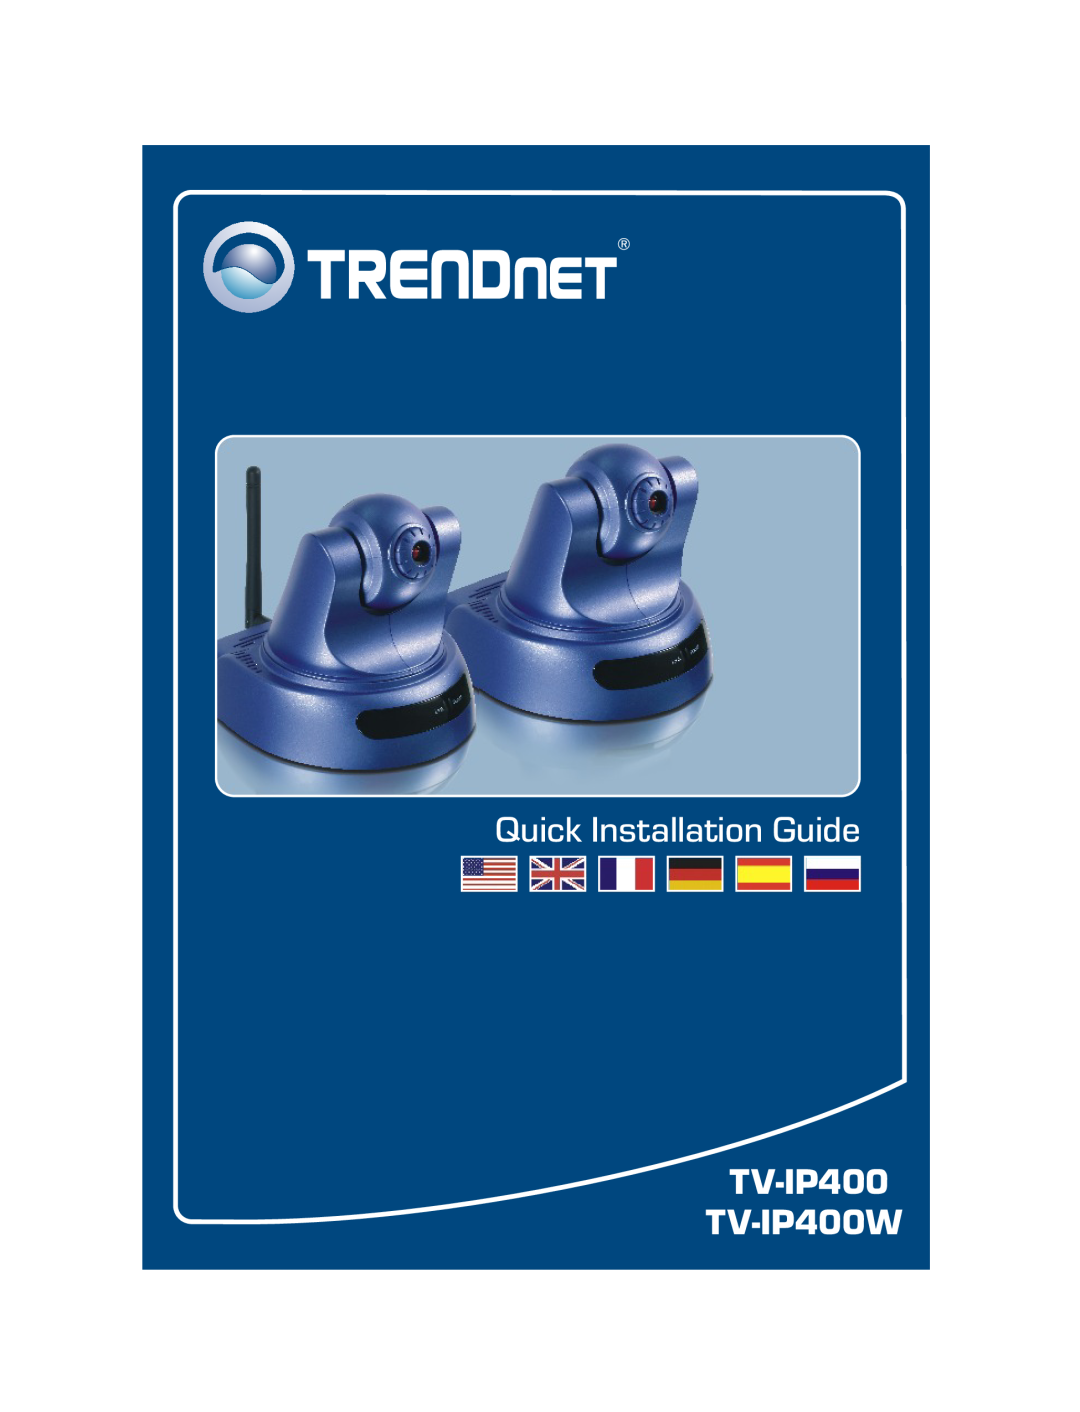 TRENDnet TE100-MP1UN V1, TRENDNET manual Quick Installation Guide 